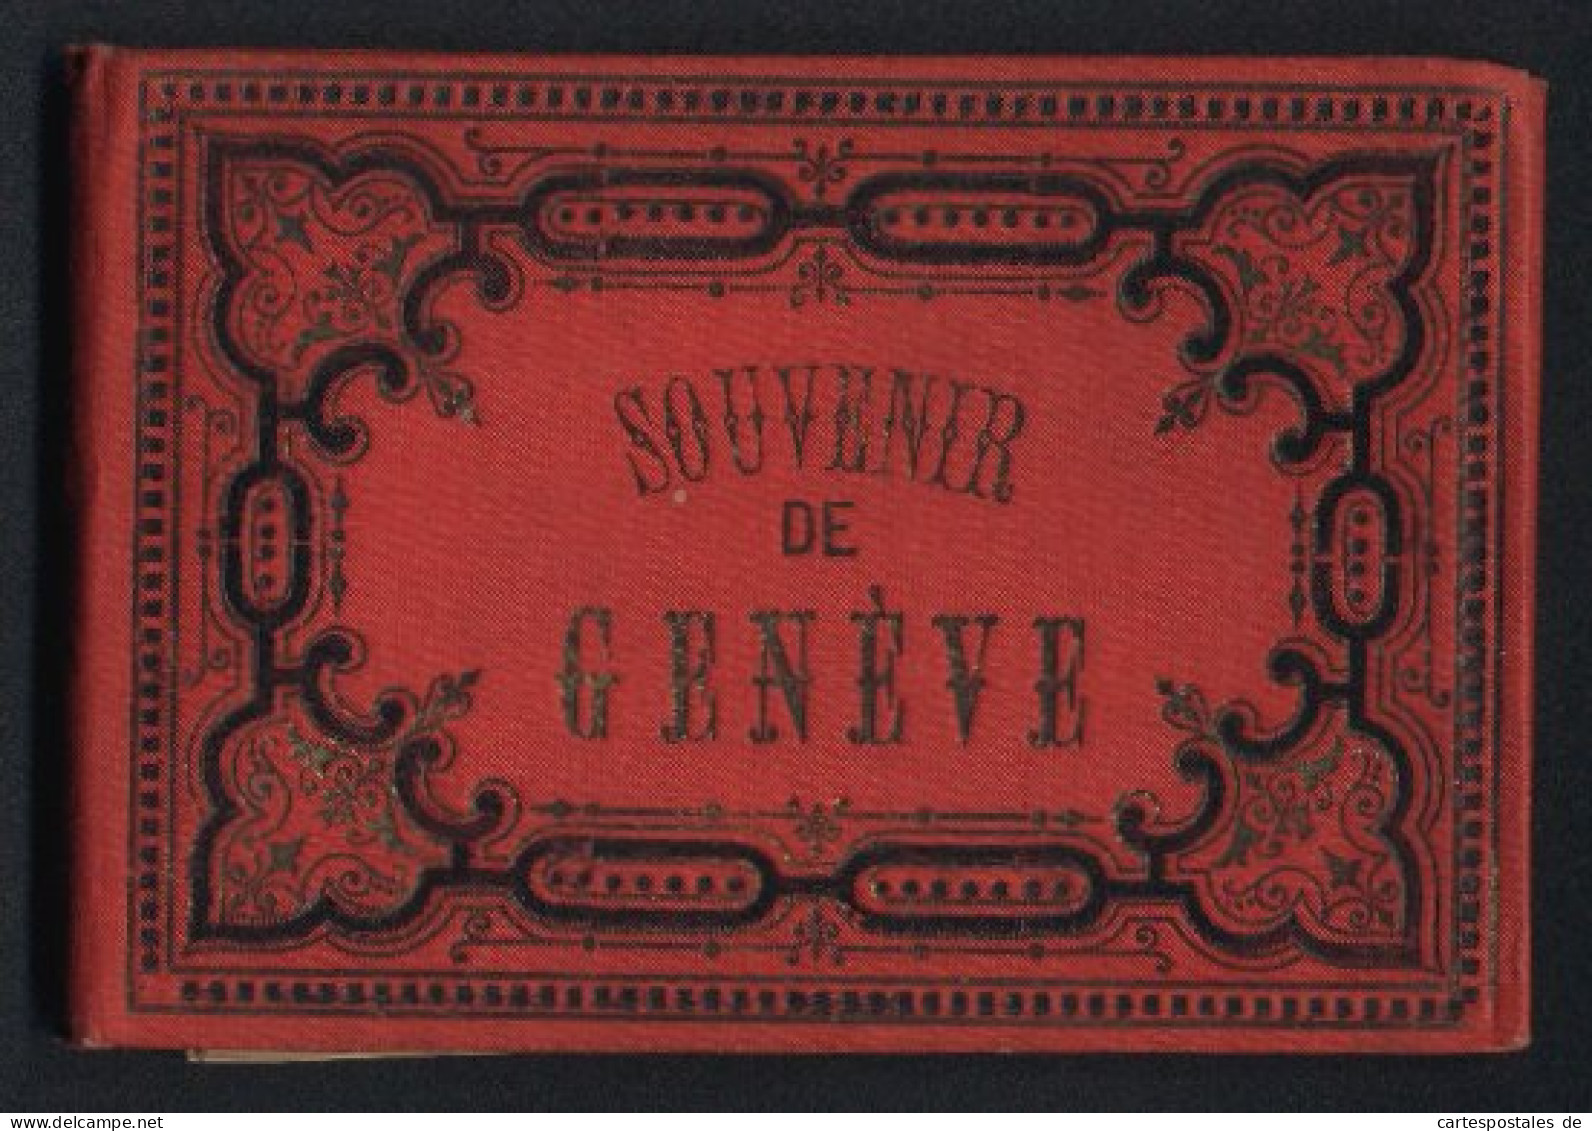 Leporello-Album Geneve Mit 24 Lithographie-Ansichten, Synagoge, Eglise Russe, Quai Du Mont Blanc, Rue Du Mont Blanc  - Lithographien